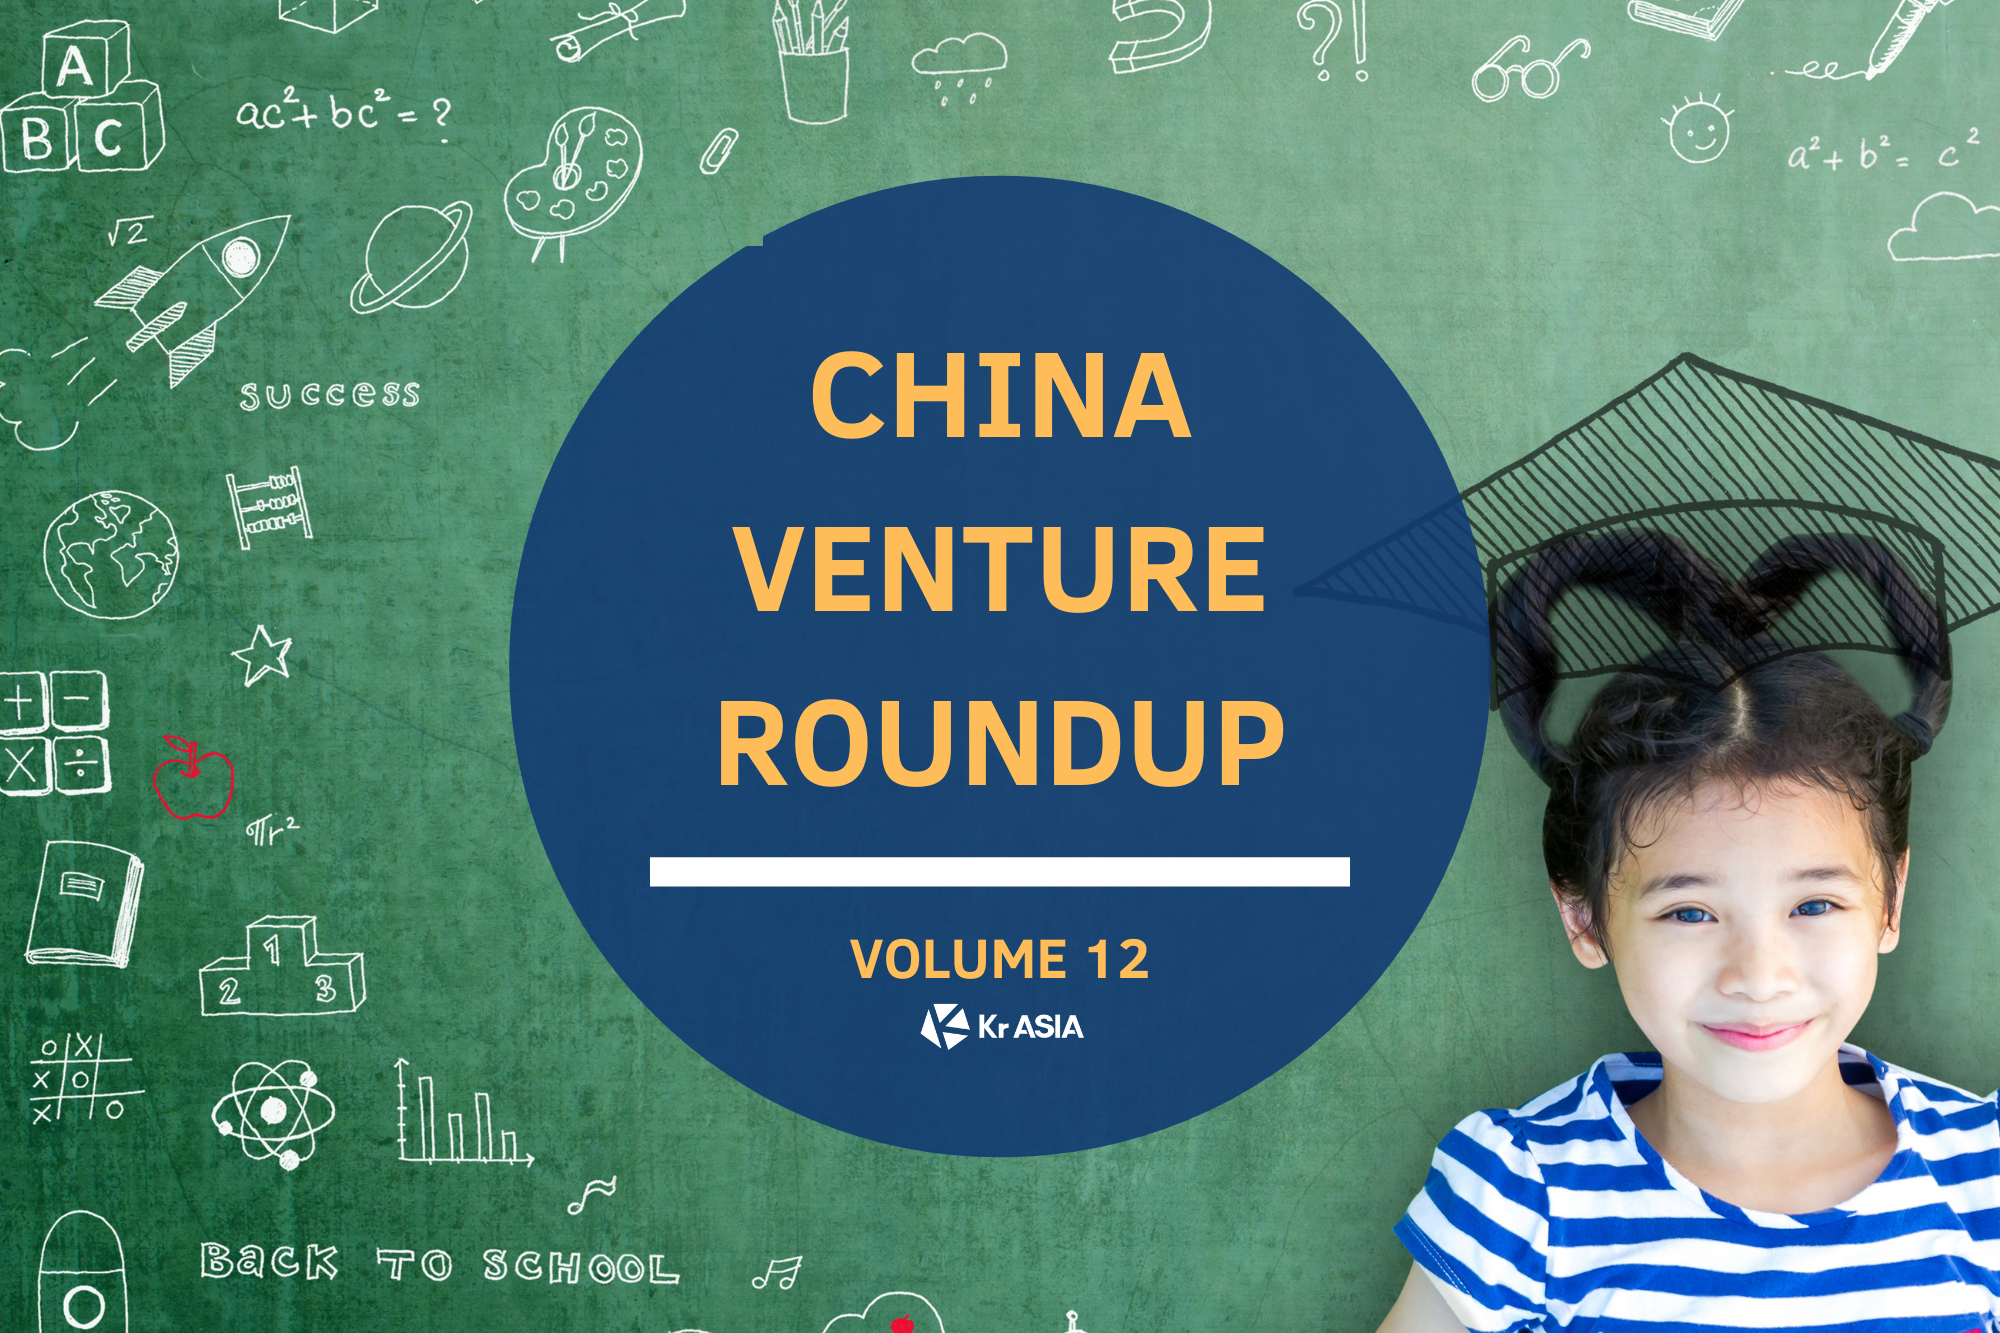 China Venture Roundup Volume 12 | The edtech startup that raised USD 265 million in Series C